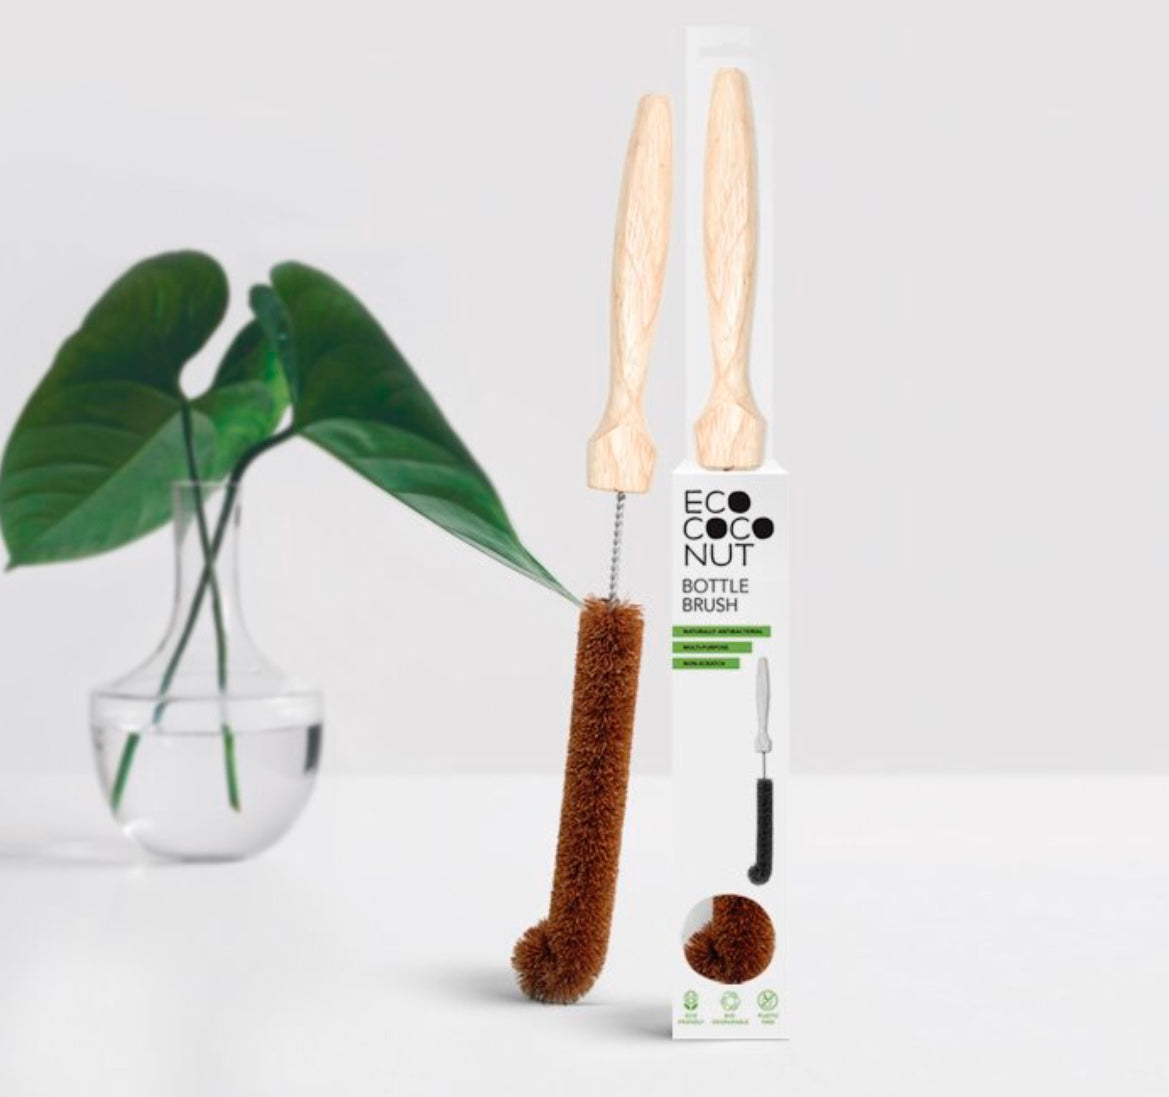 EcoCoconut Bottle Brush by Eco Living